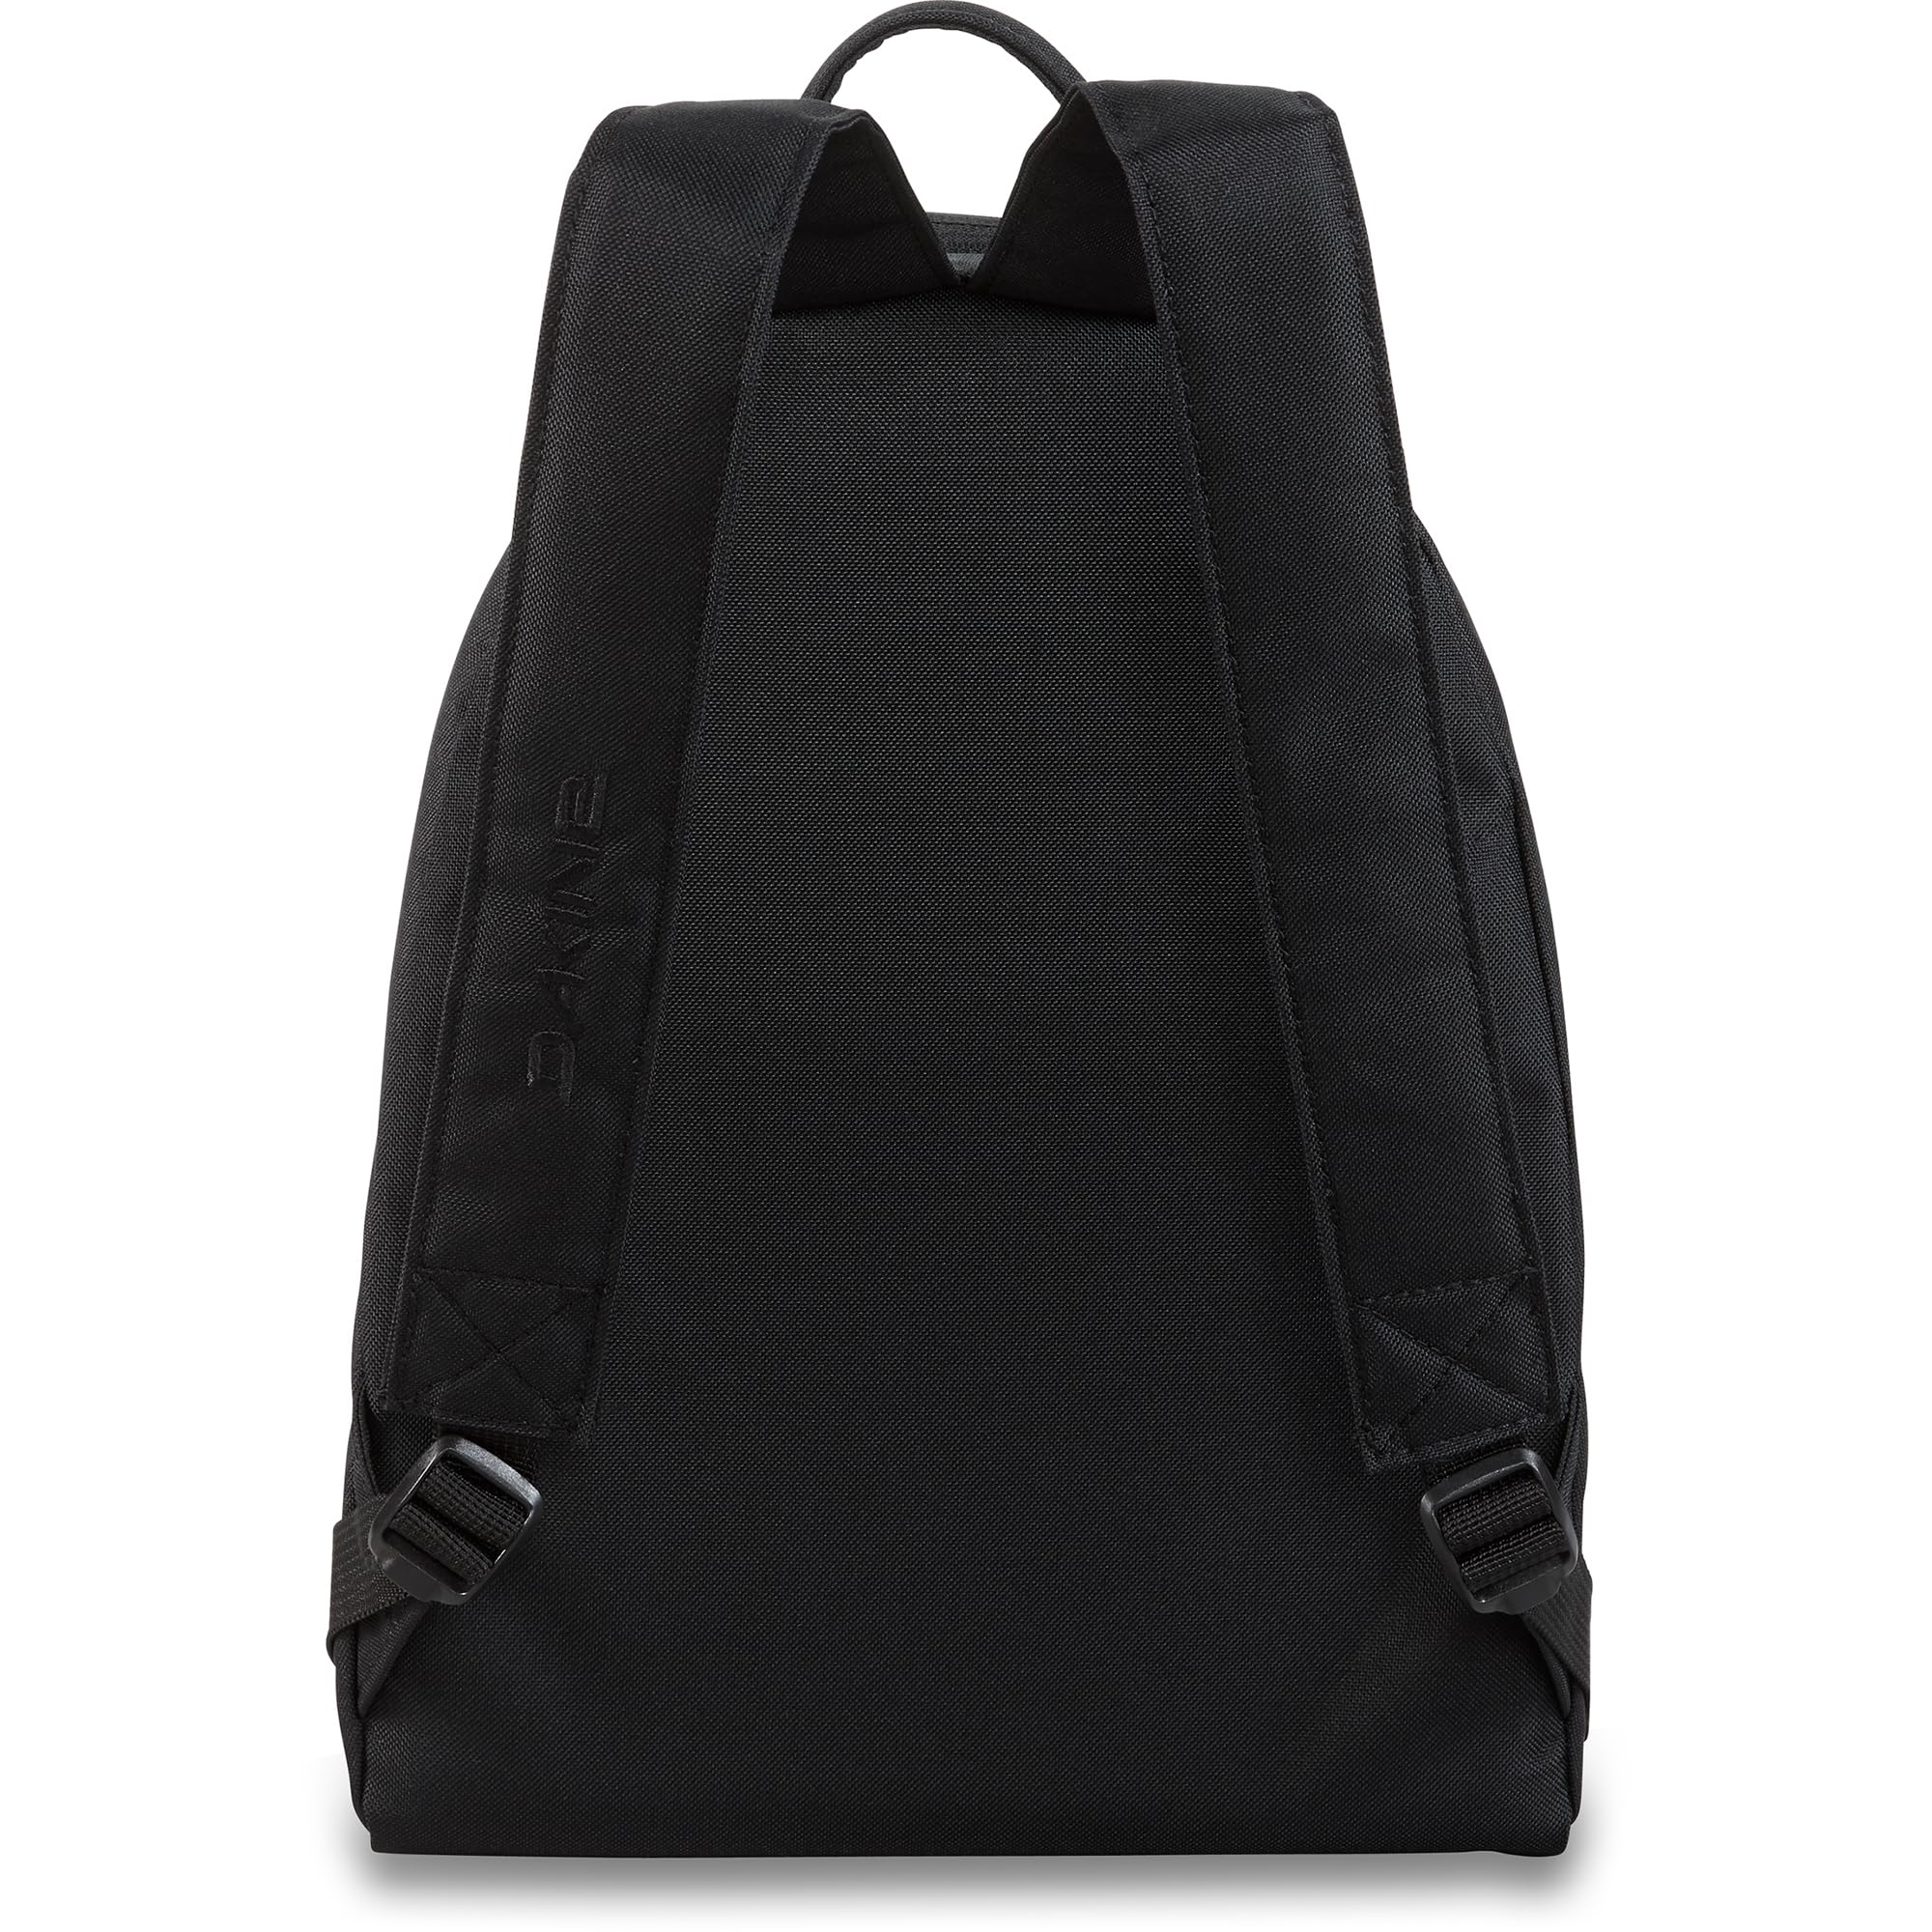 Dakine Cosmo Backpack - Black, 6.5 Liter